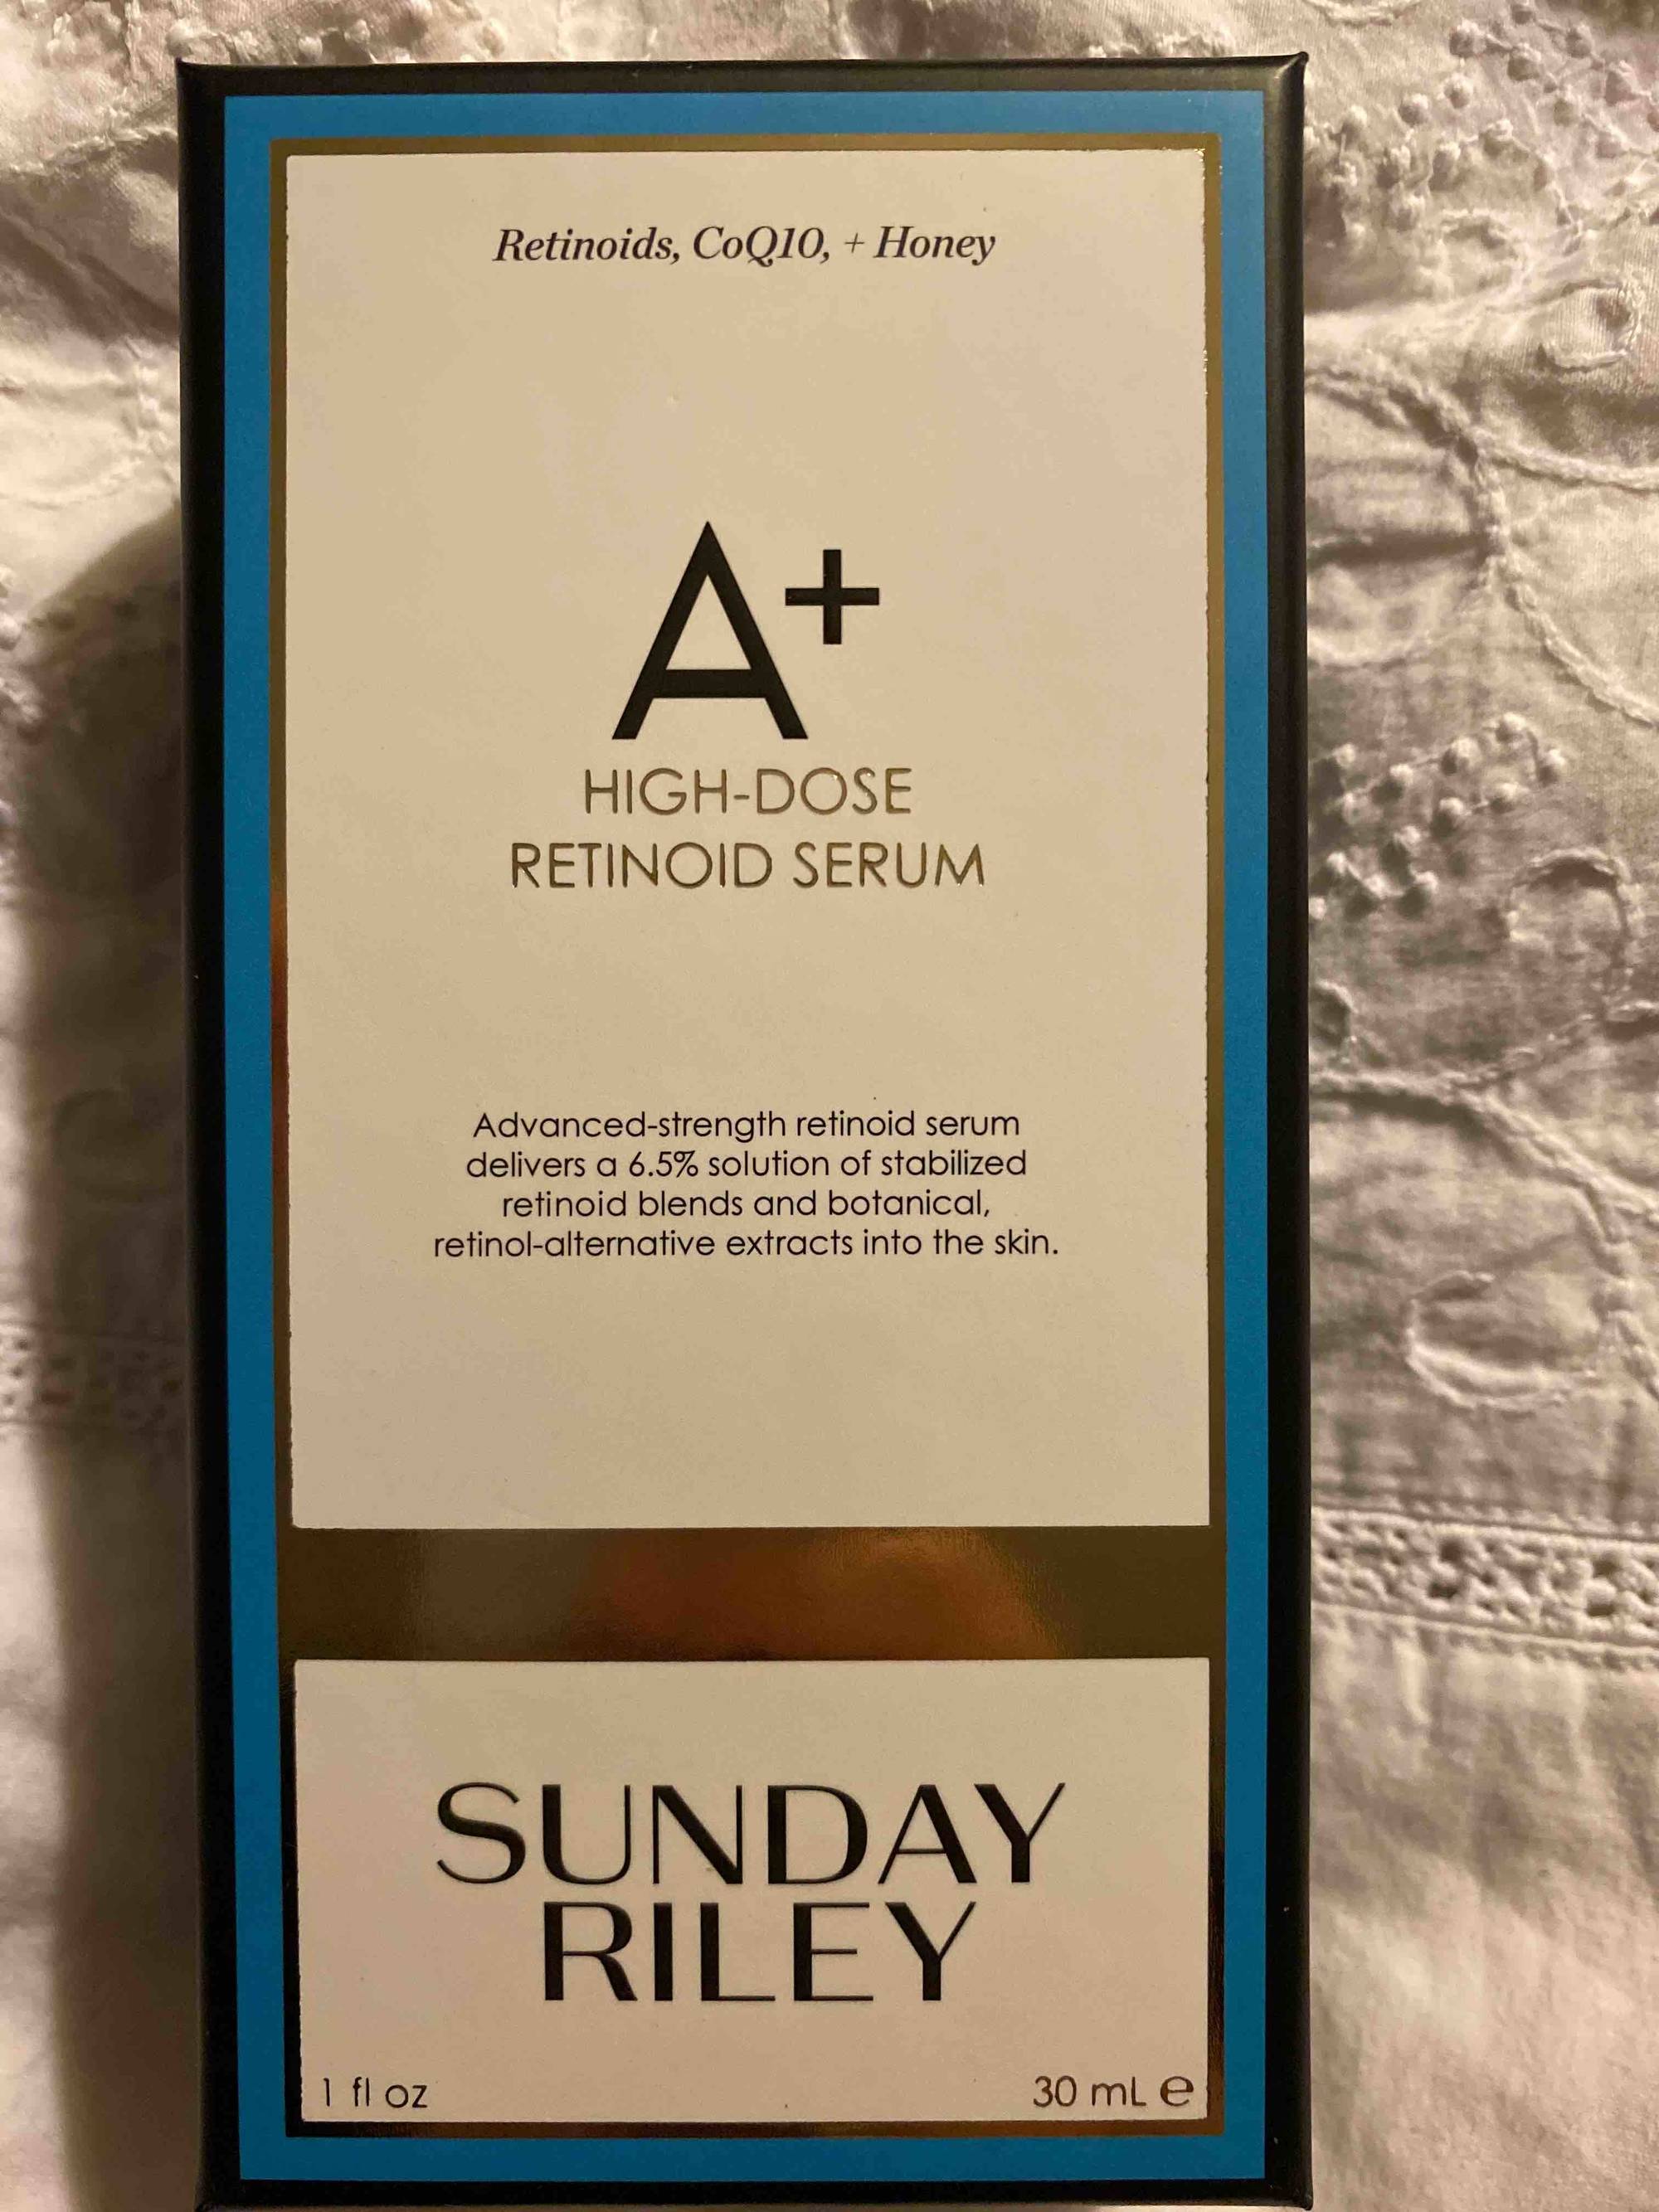 SUNDAY RILEY - A+ High-dose retinoid serum